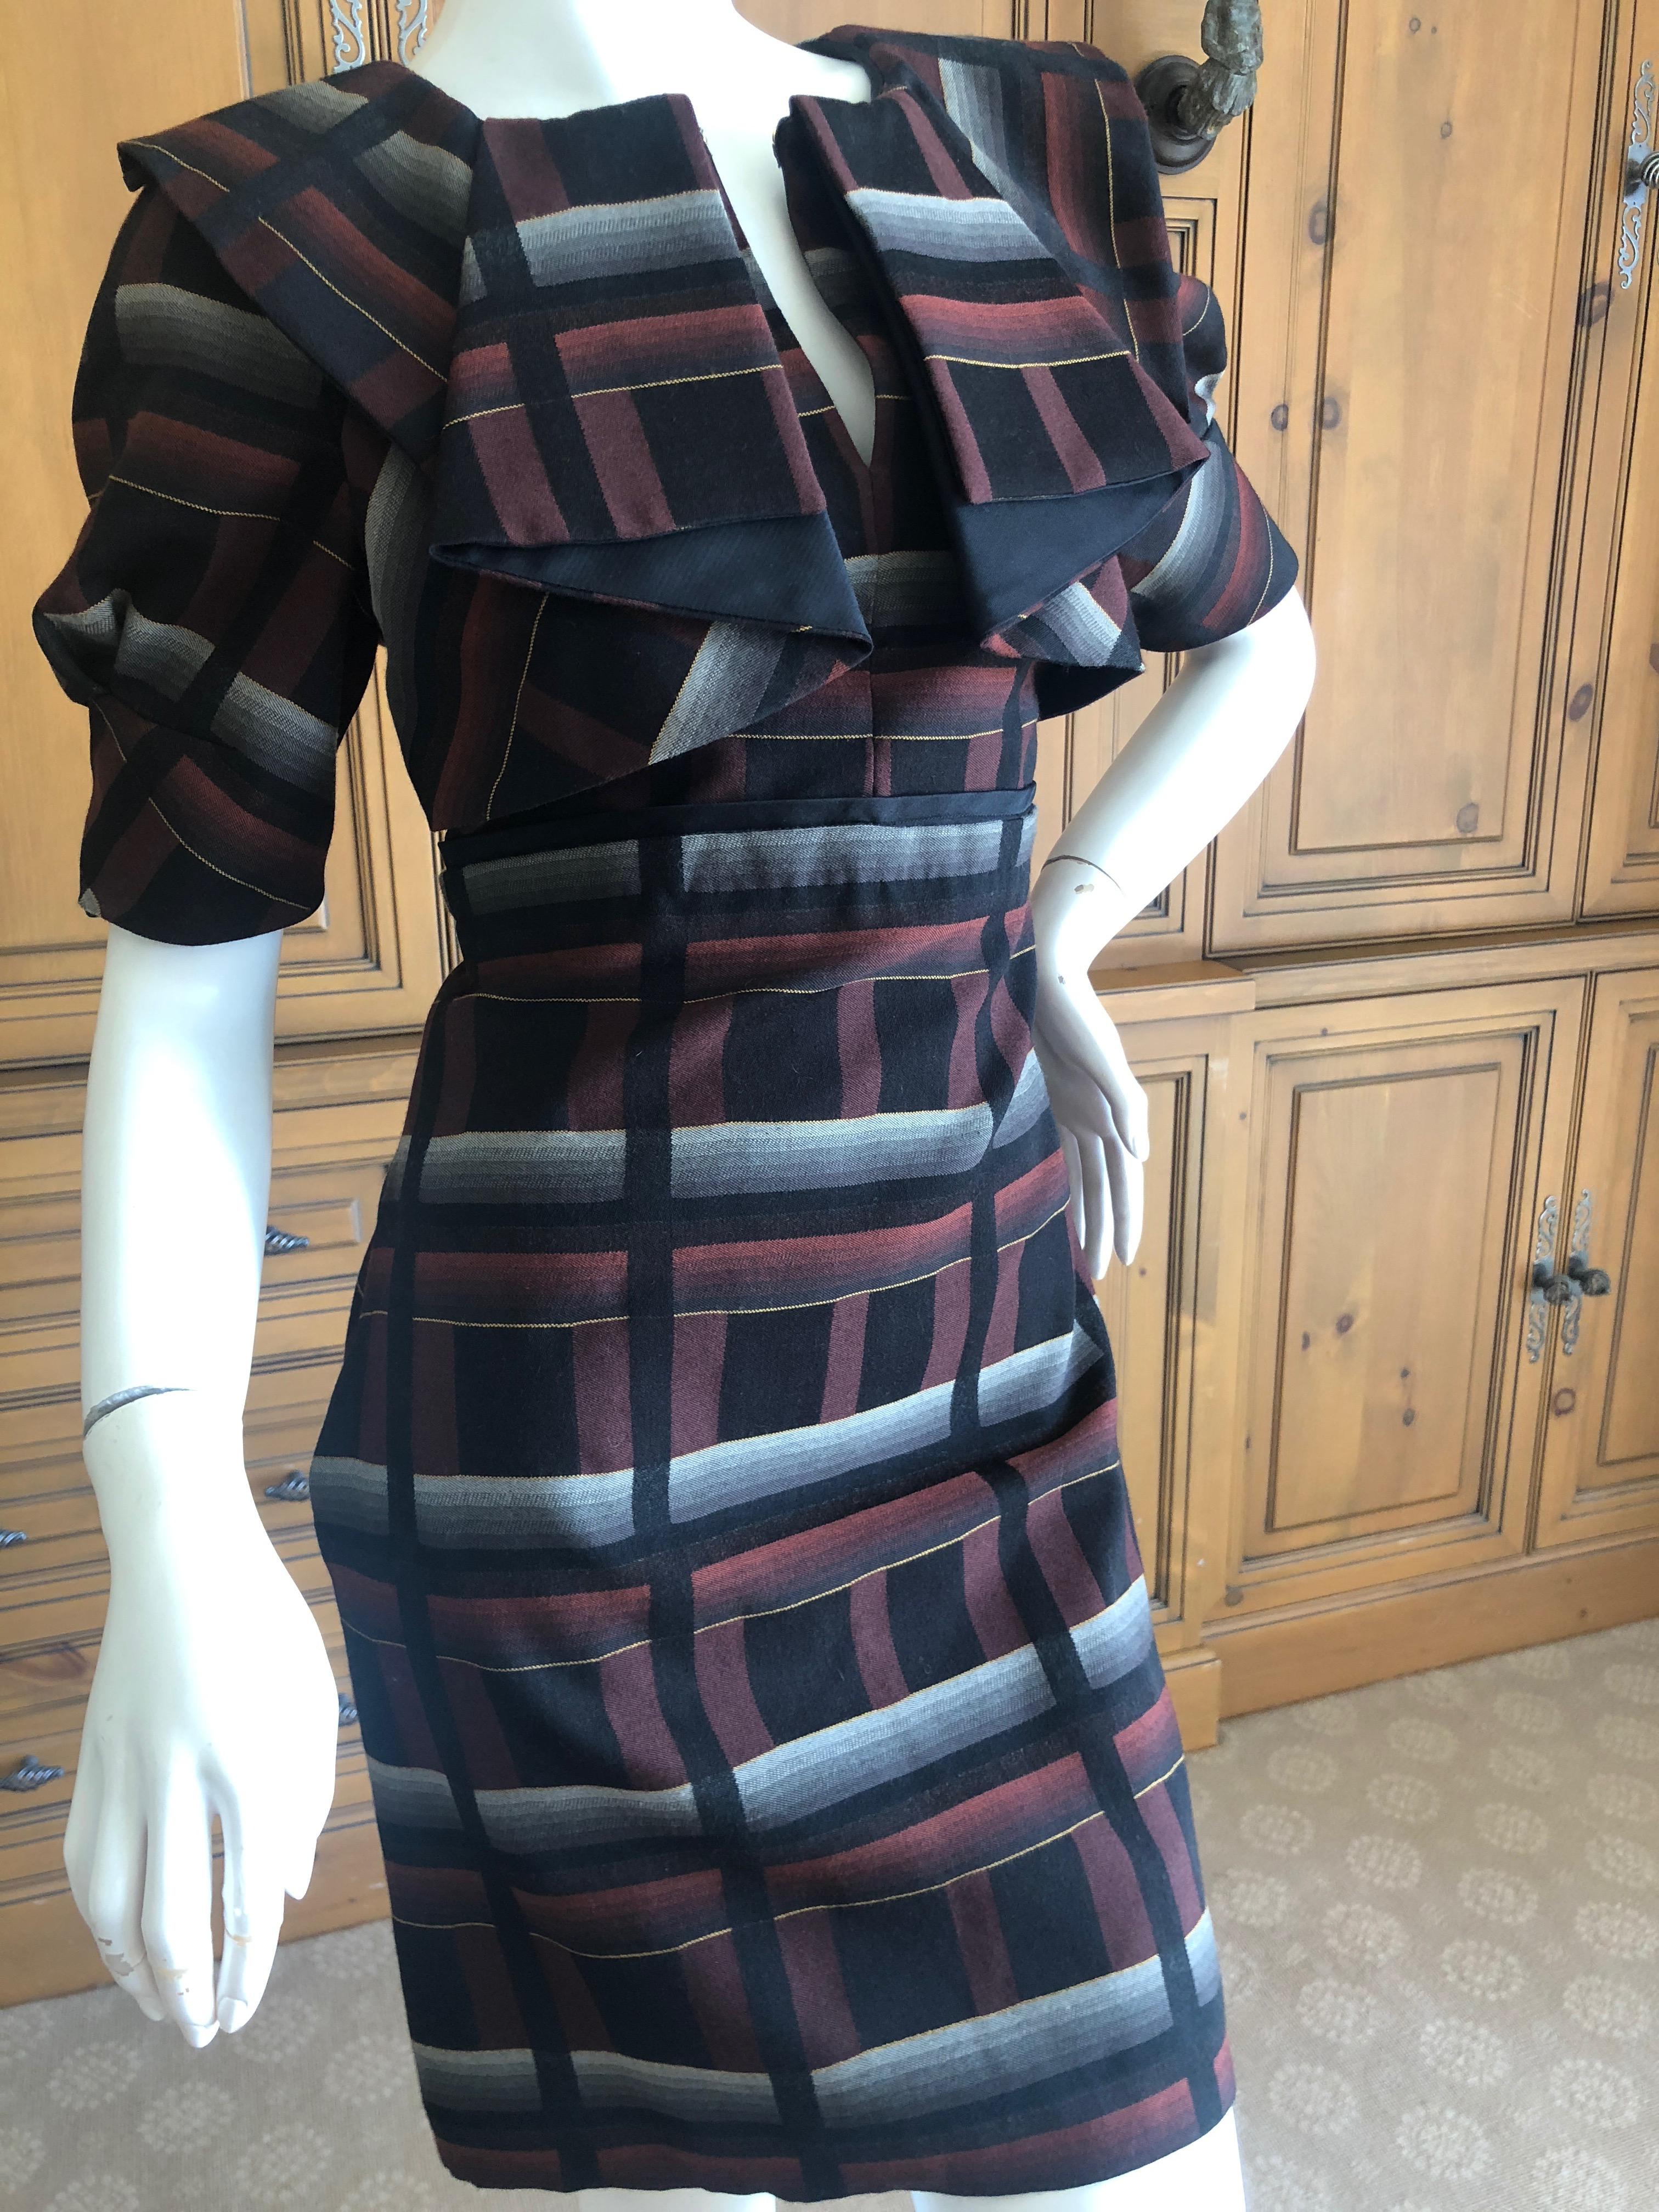 Gucci Origami Plaid Pattern Dress
Size M
Bust 34